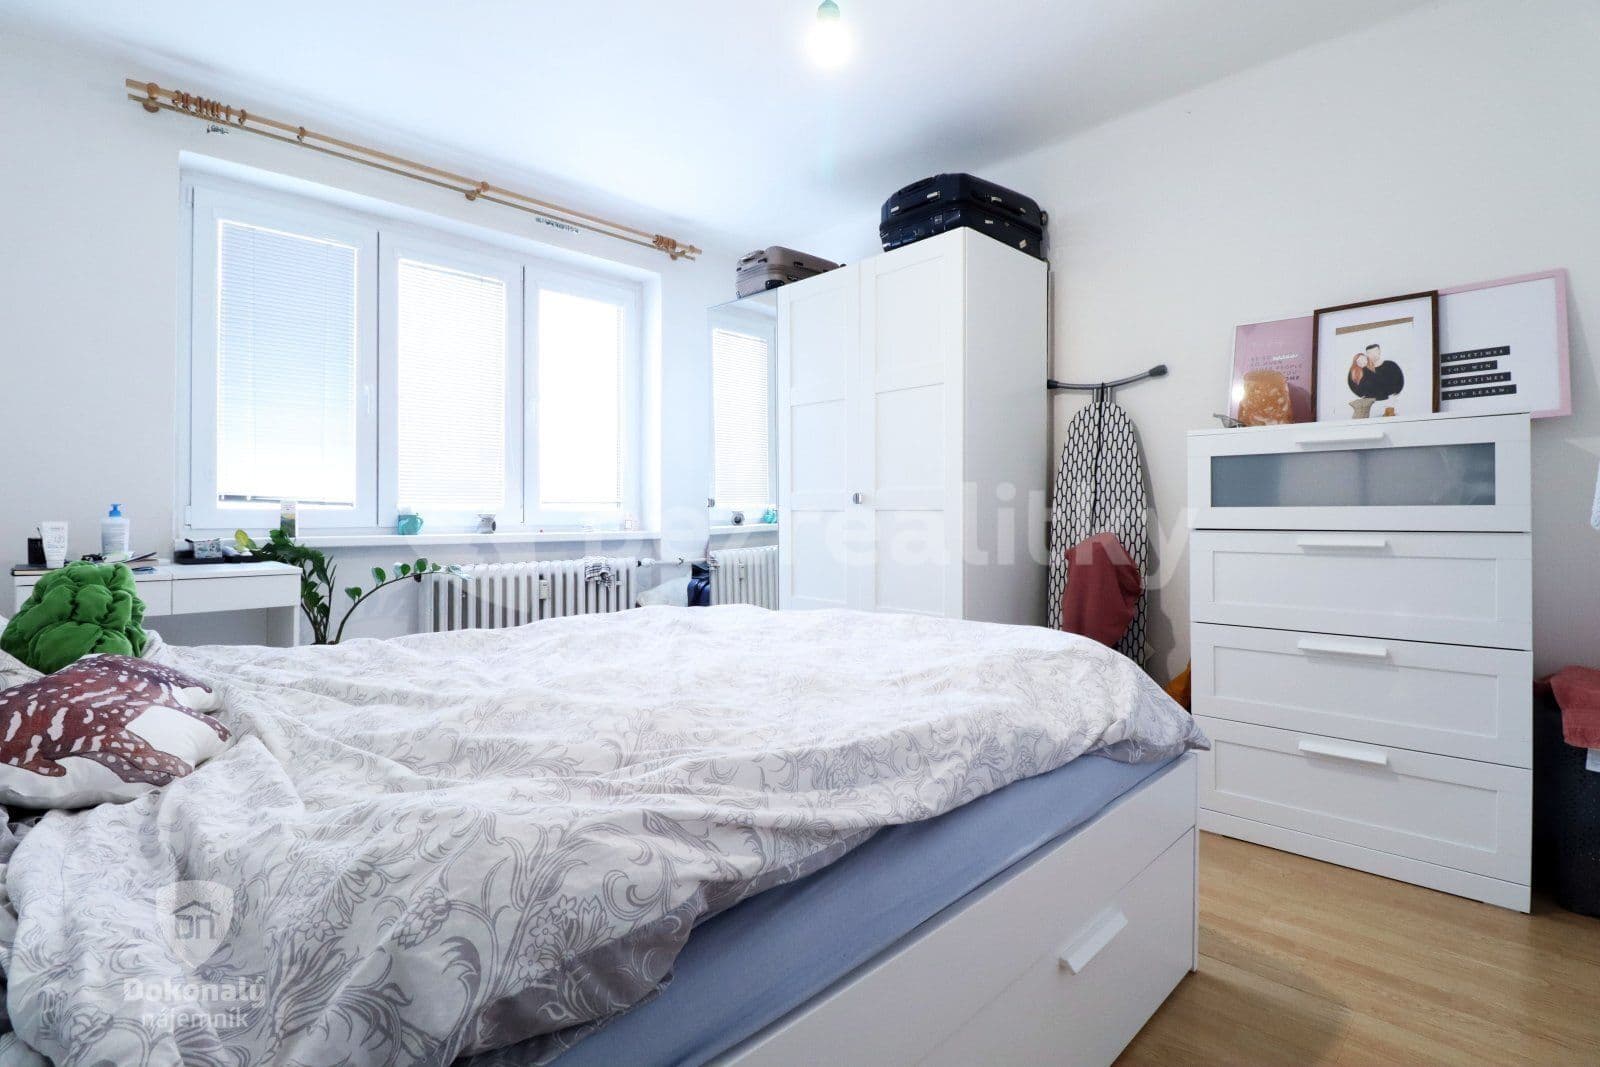 3 bedroom flat to rent, 65 m², Vrbenského, Prague, Prague